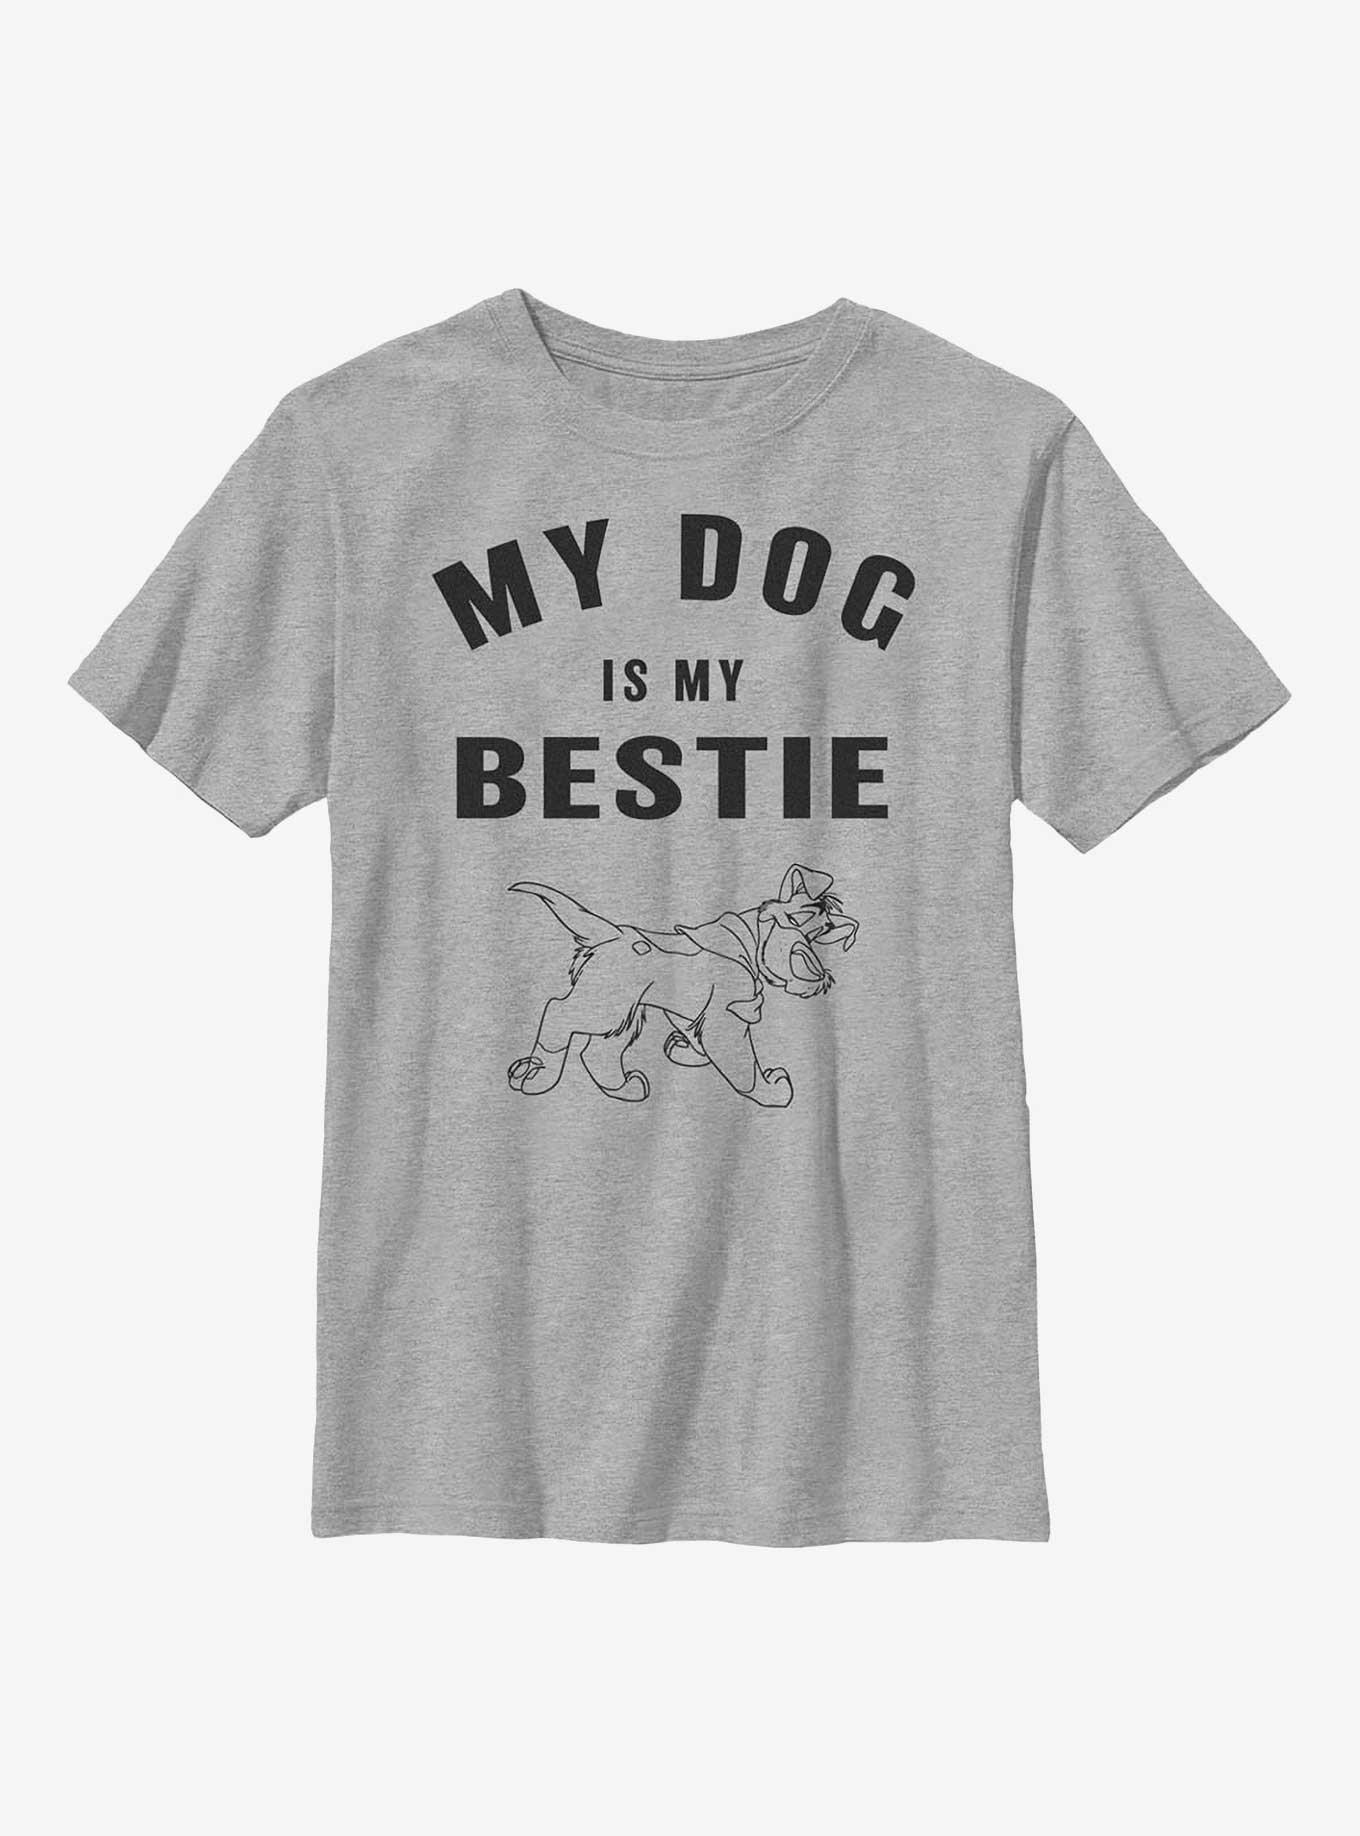 dodger shirt for dogs